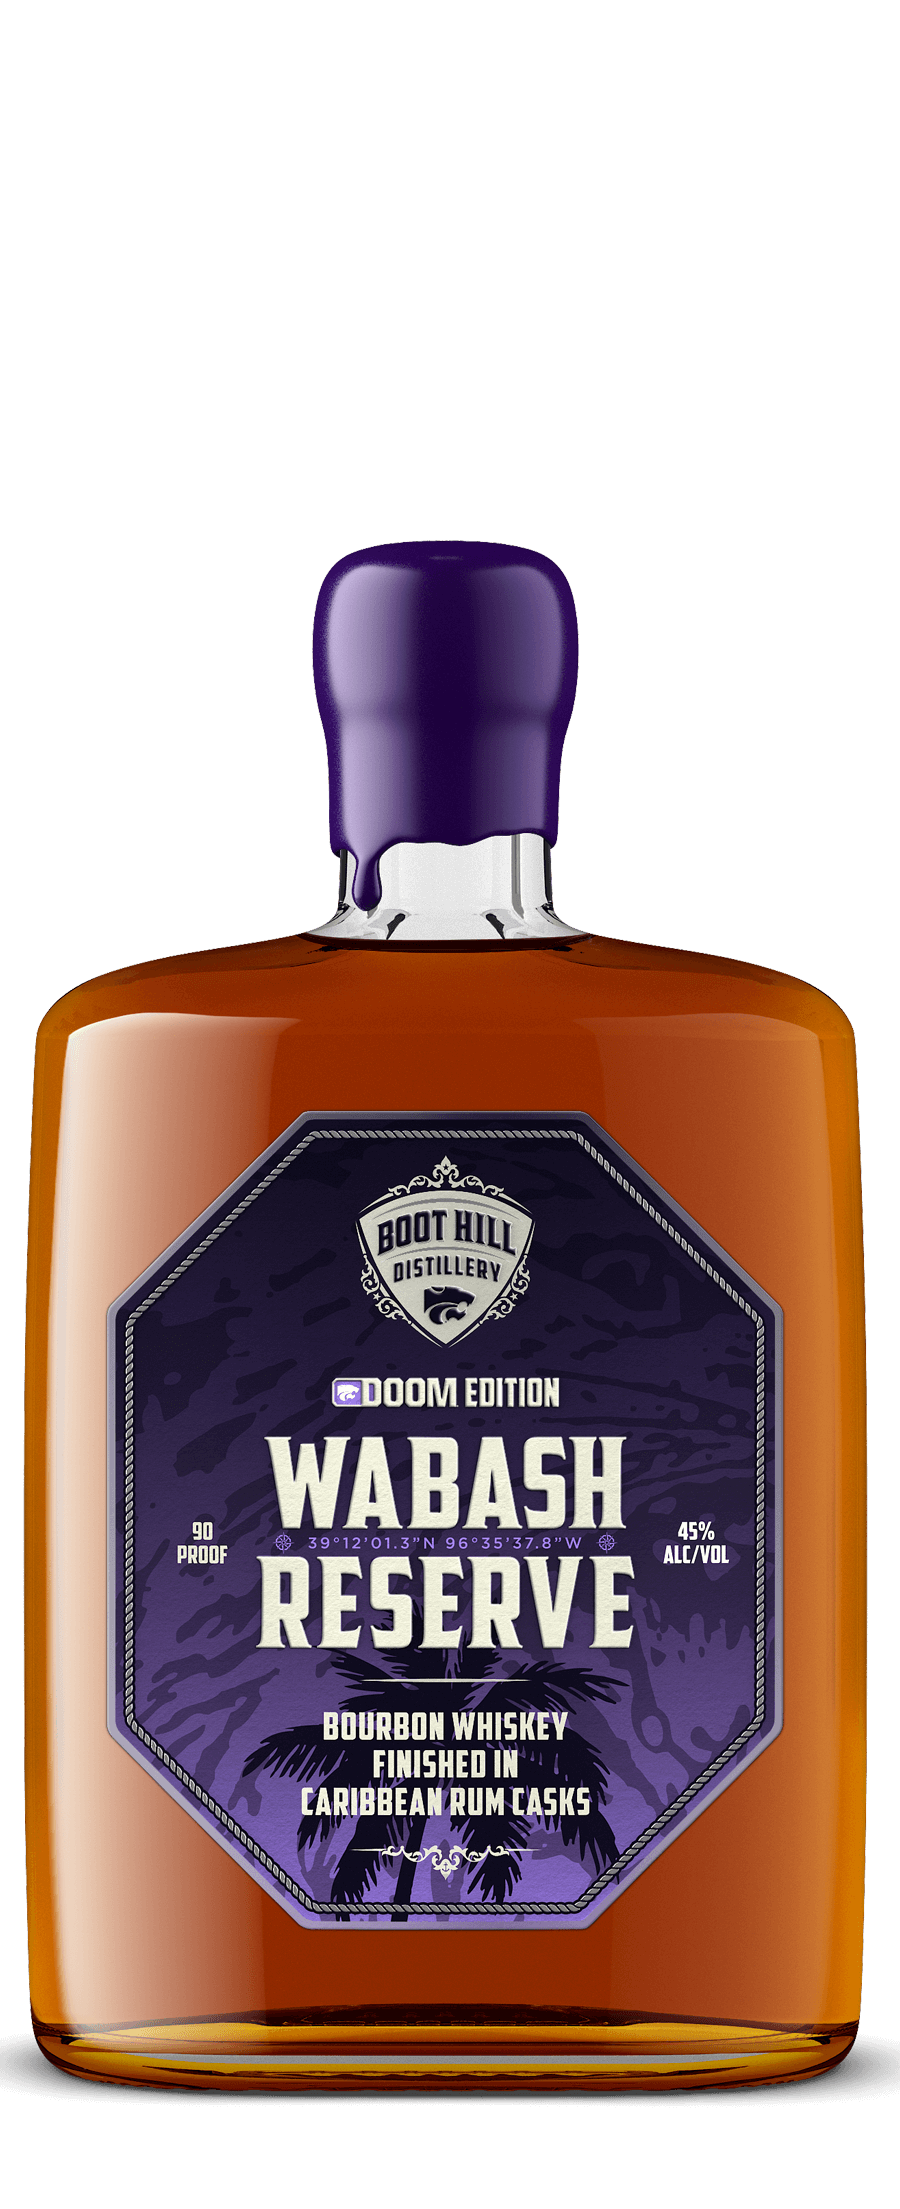 Wahbash Reserve DOOM edition bourbon whisky